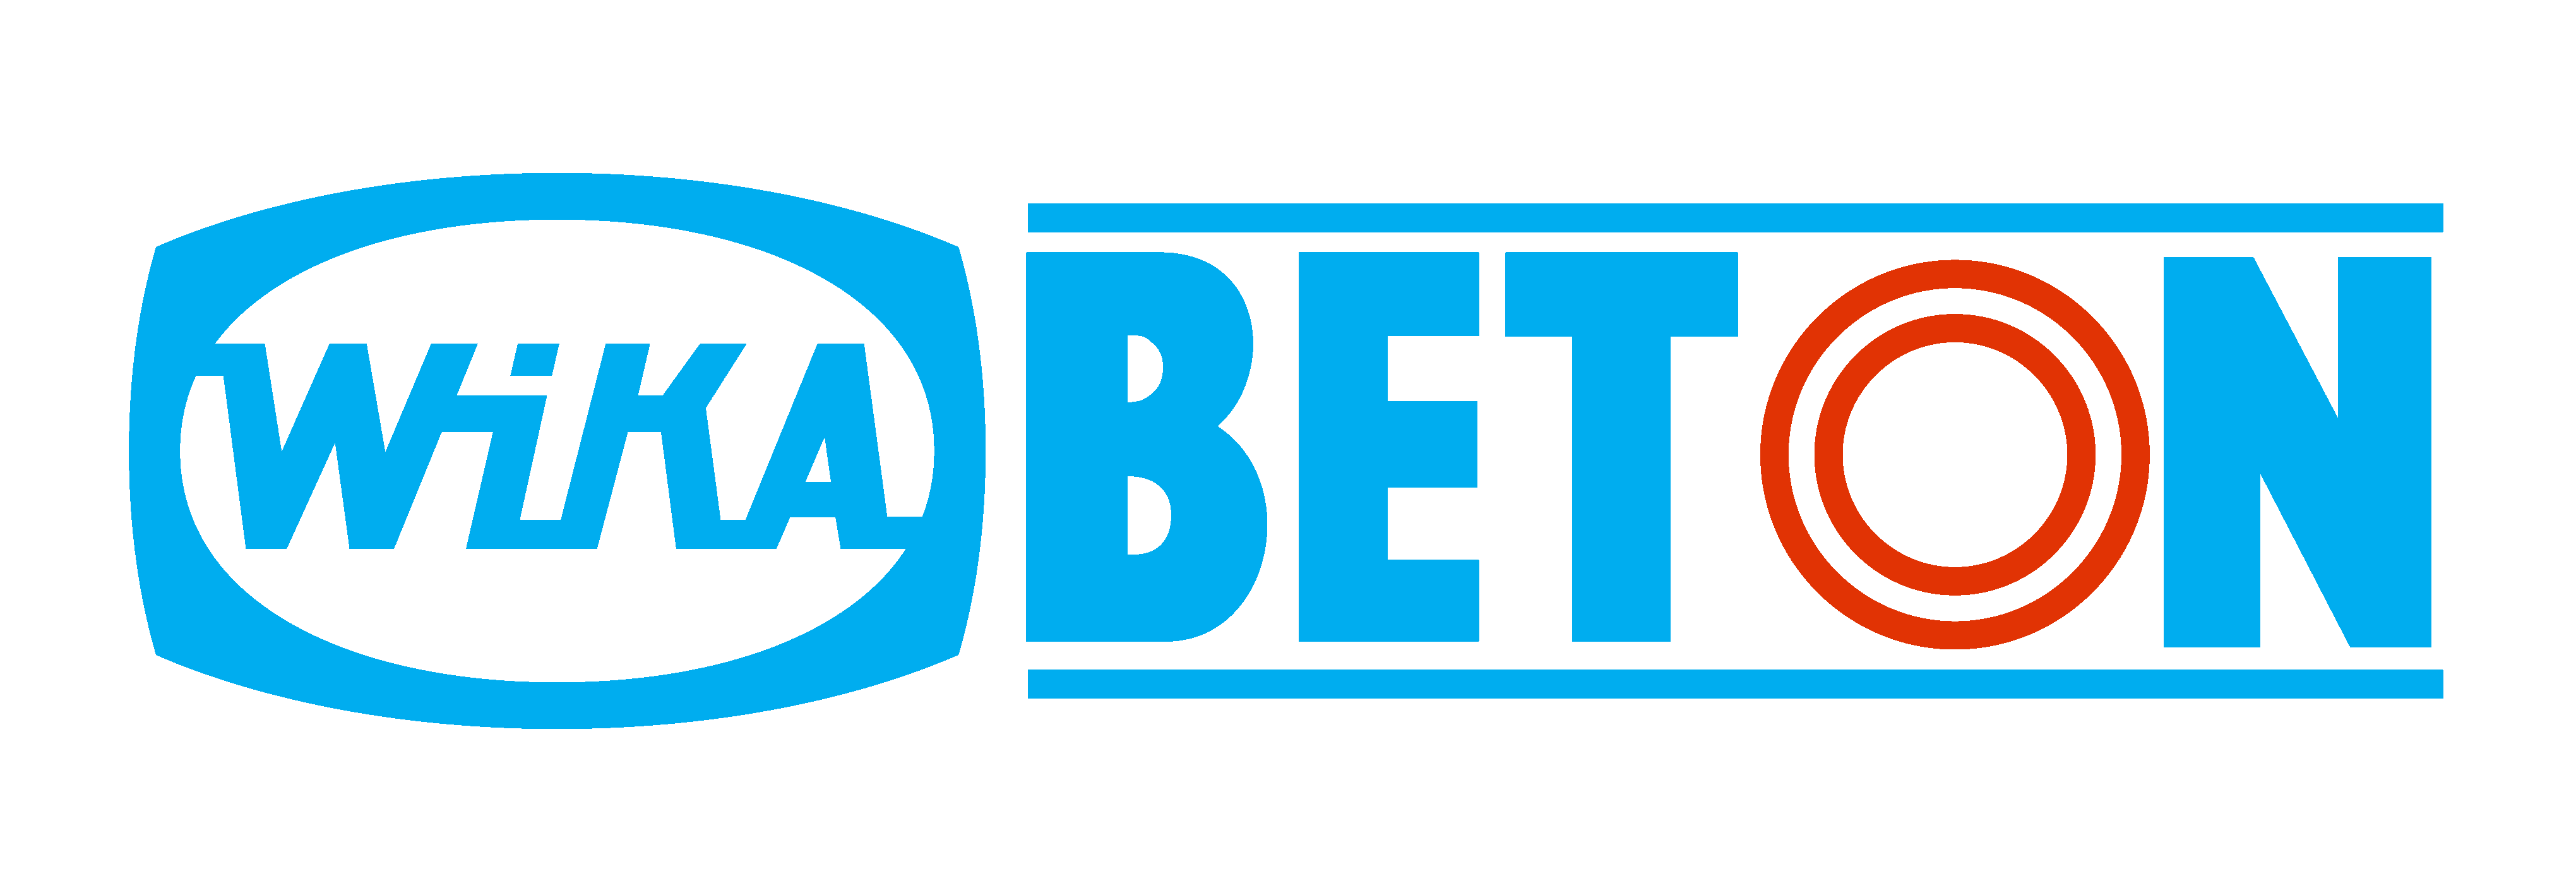 WIKA BETON Brand Logo